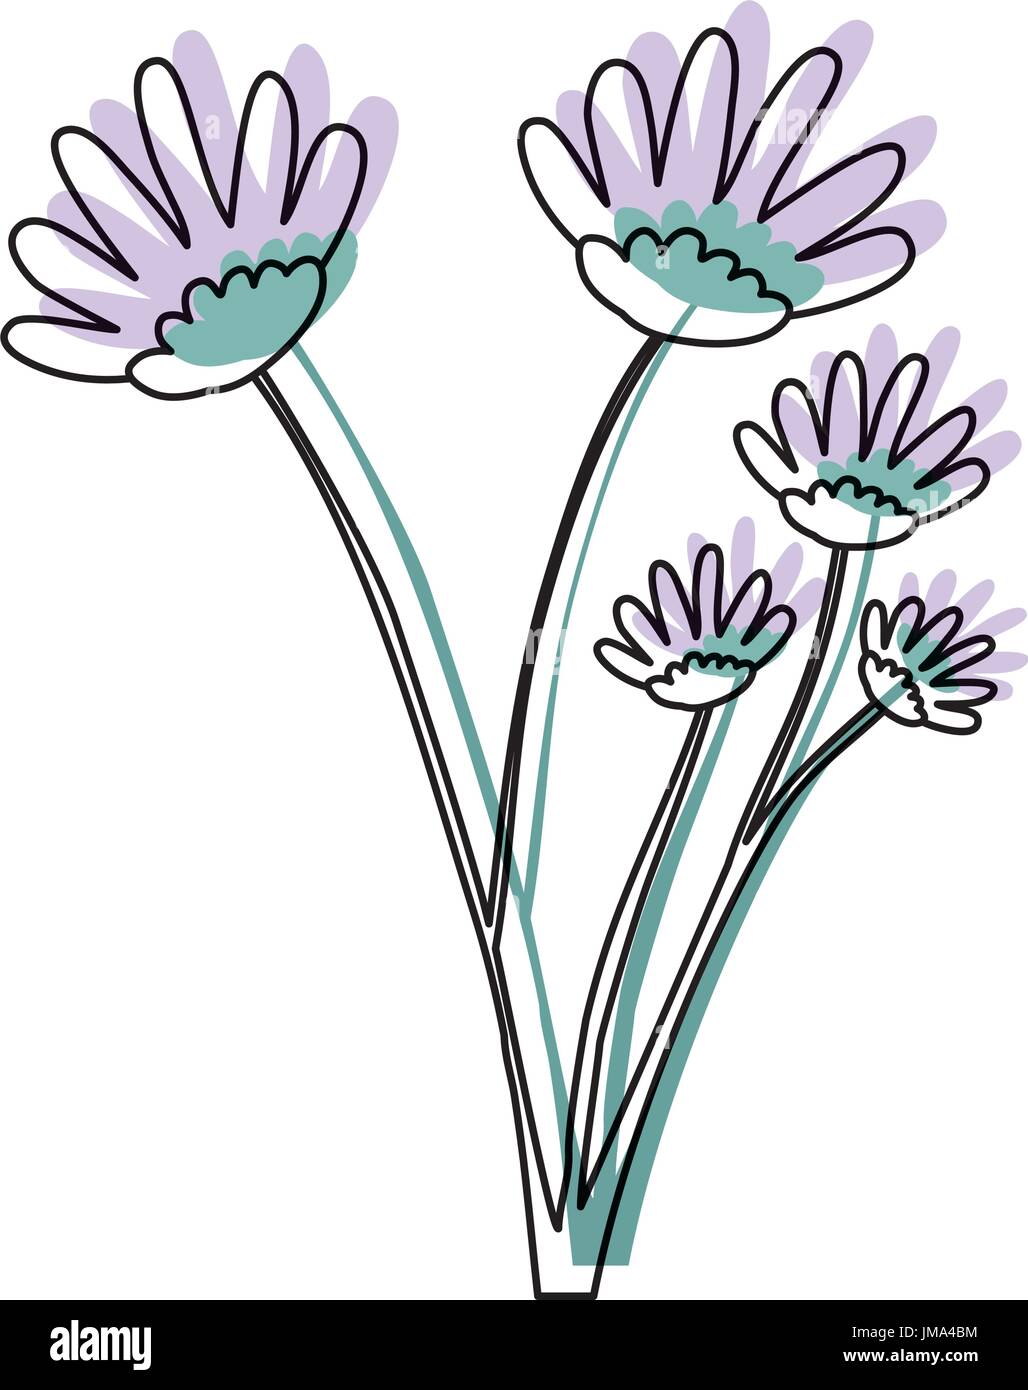 Acuarela silueta de dibujo a mano alzada, lila daisy ramo de flores con  varias ramificaciones Imagen Vector de stock - Alamy